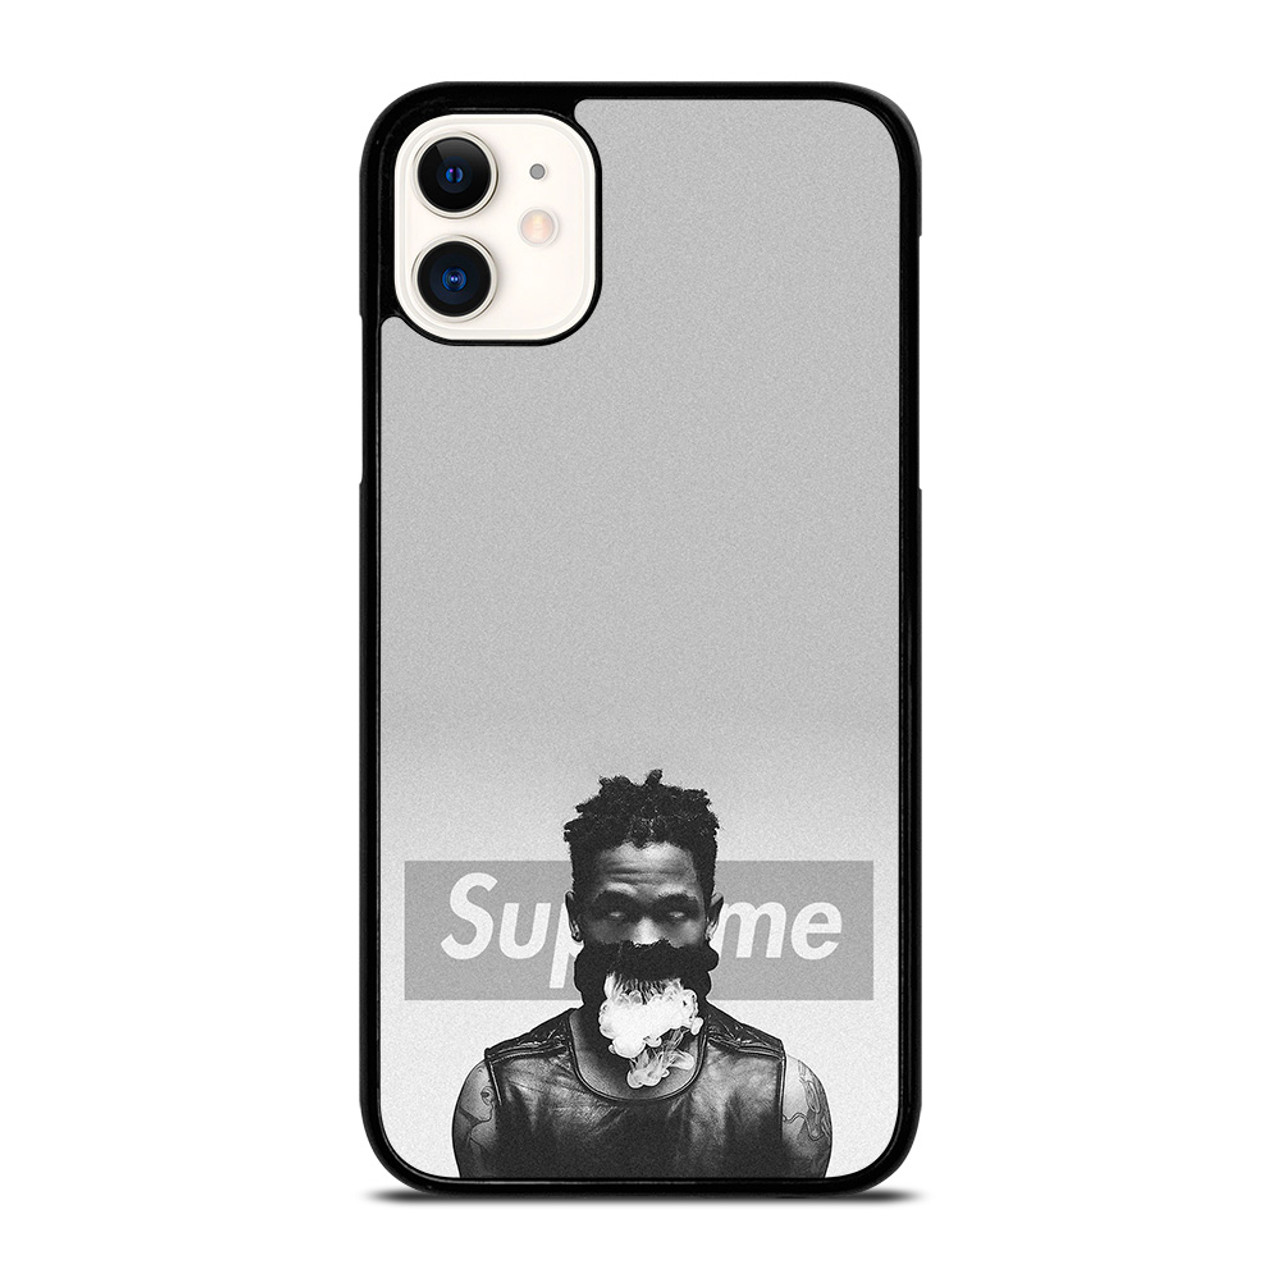 iphone 11 supreme case